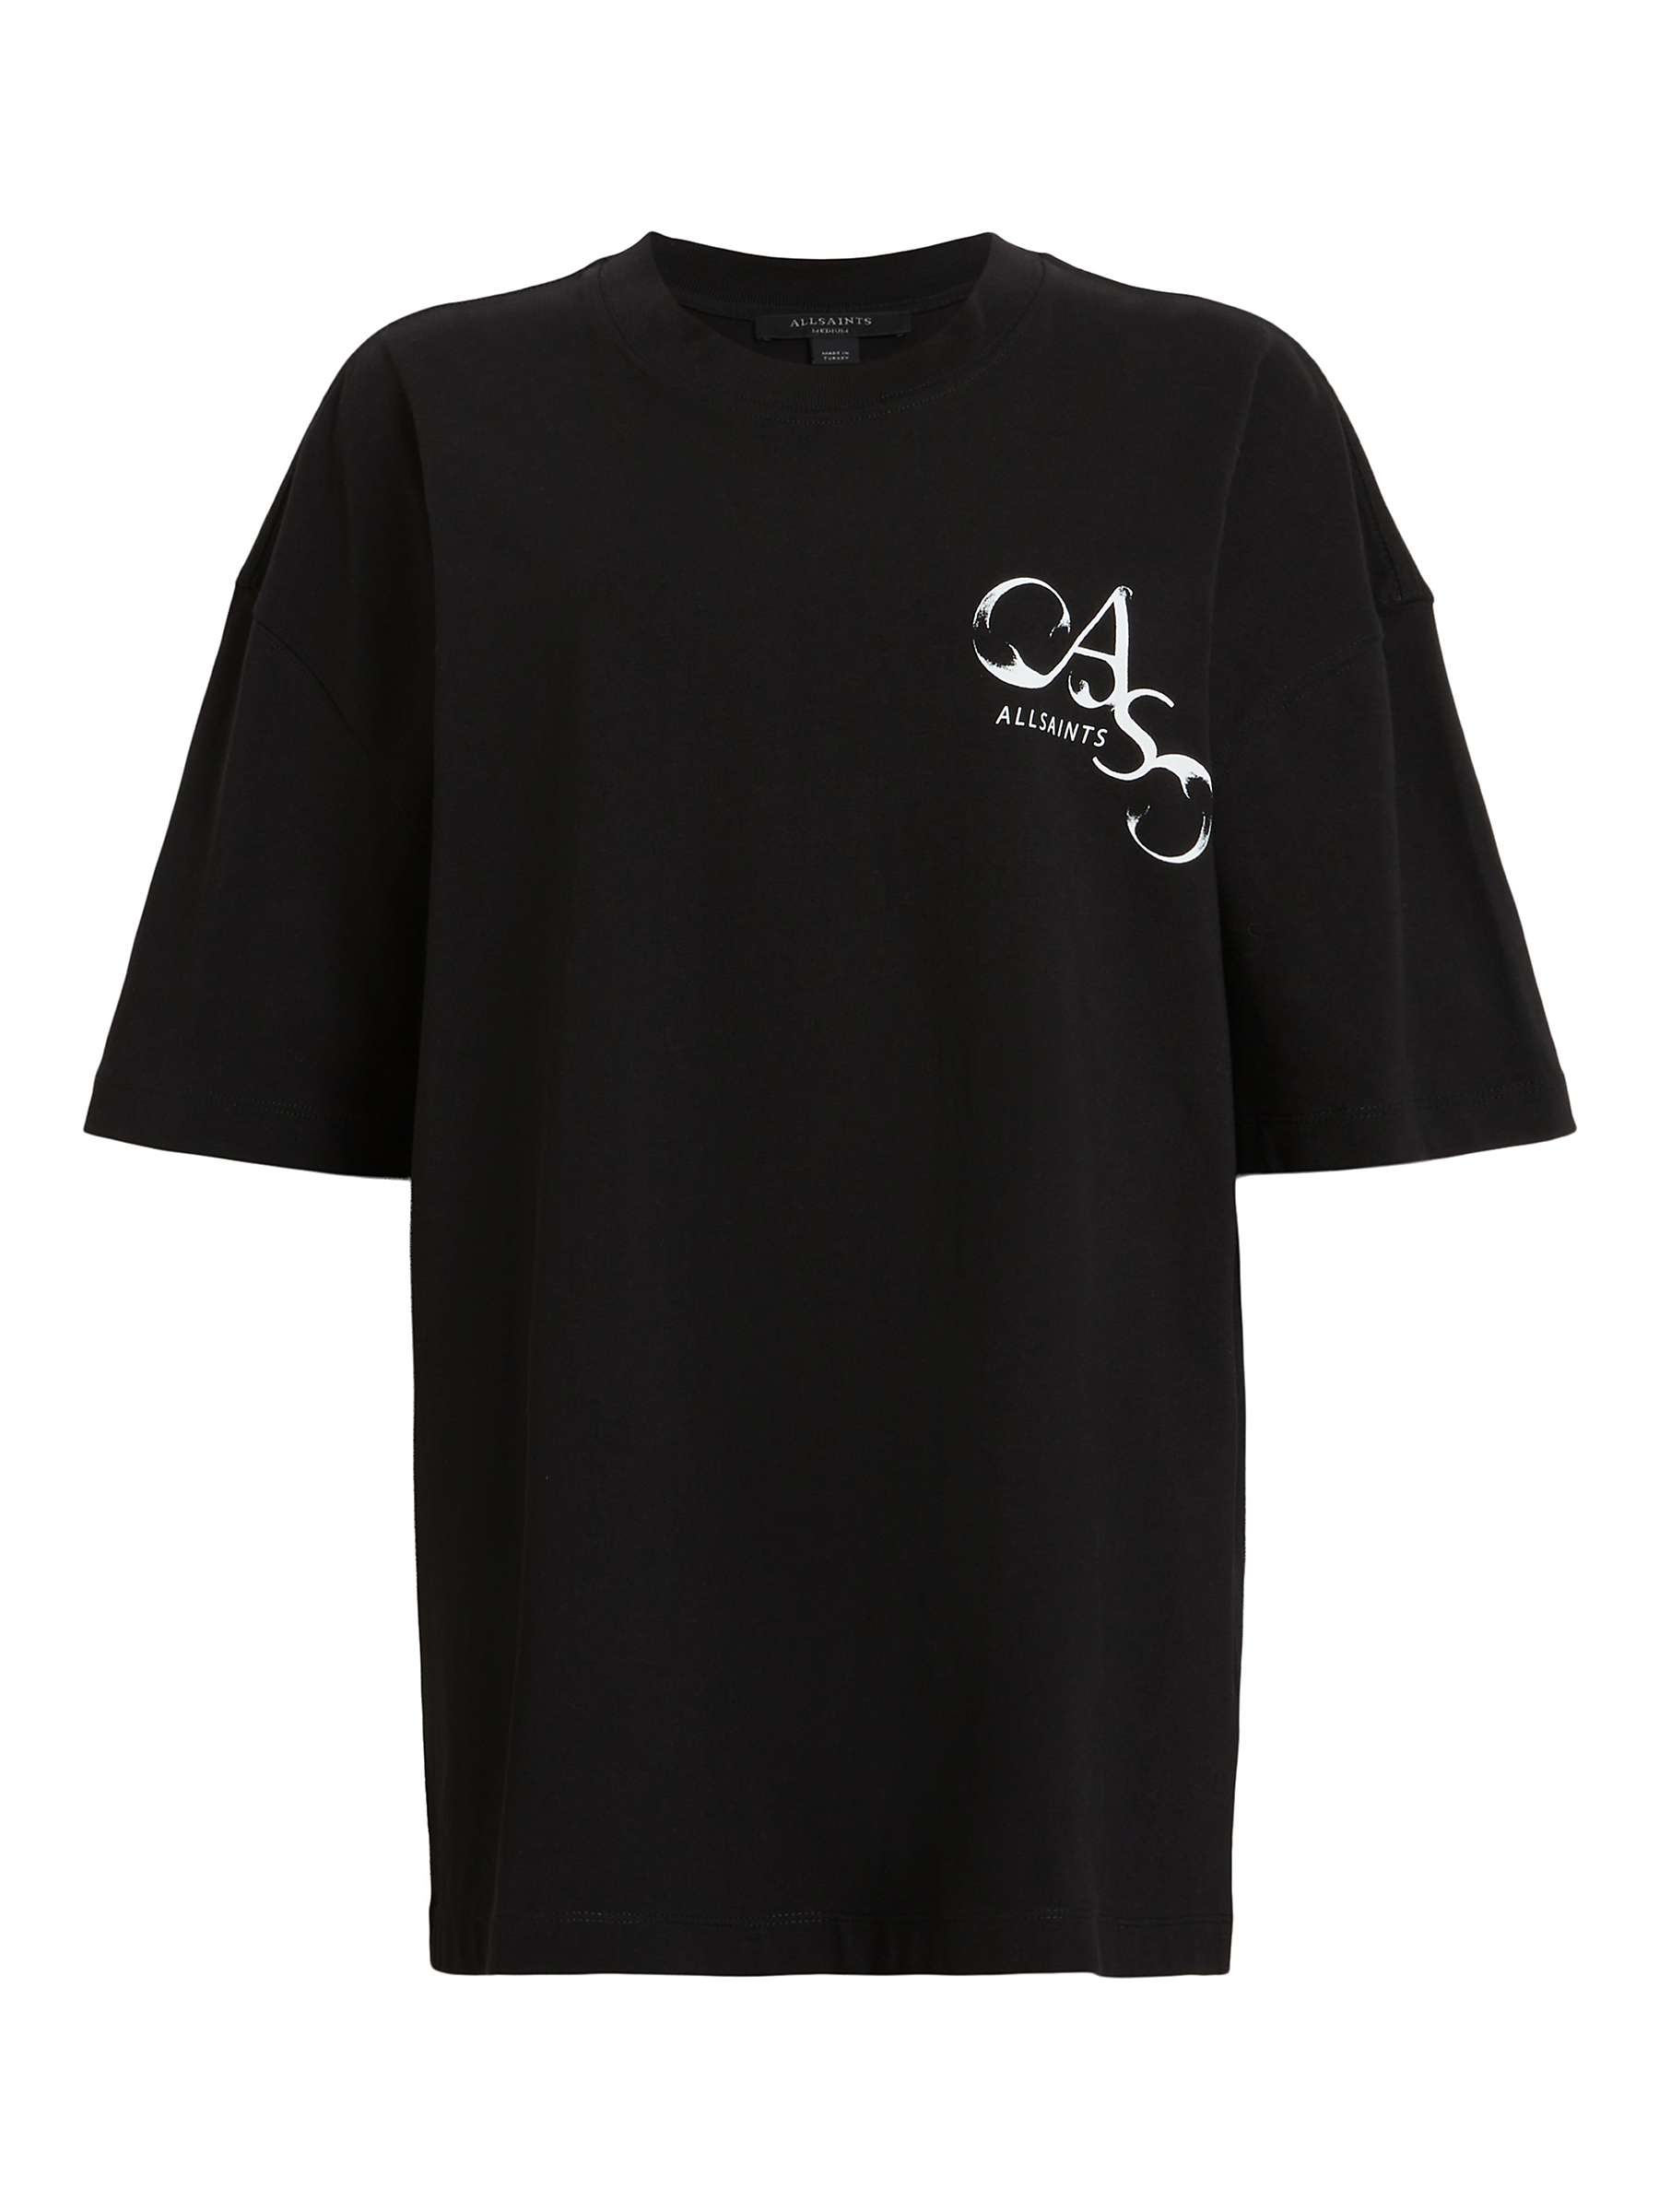 Buy AllSaints Moments Organic Cotton T-Shirt, Black Online at johnlewis.com